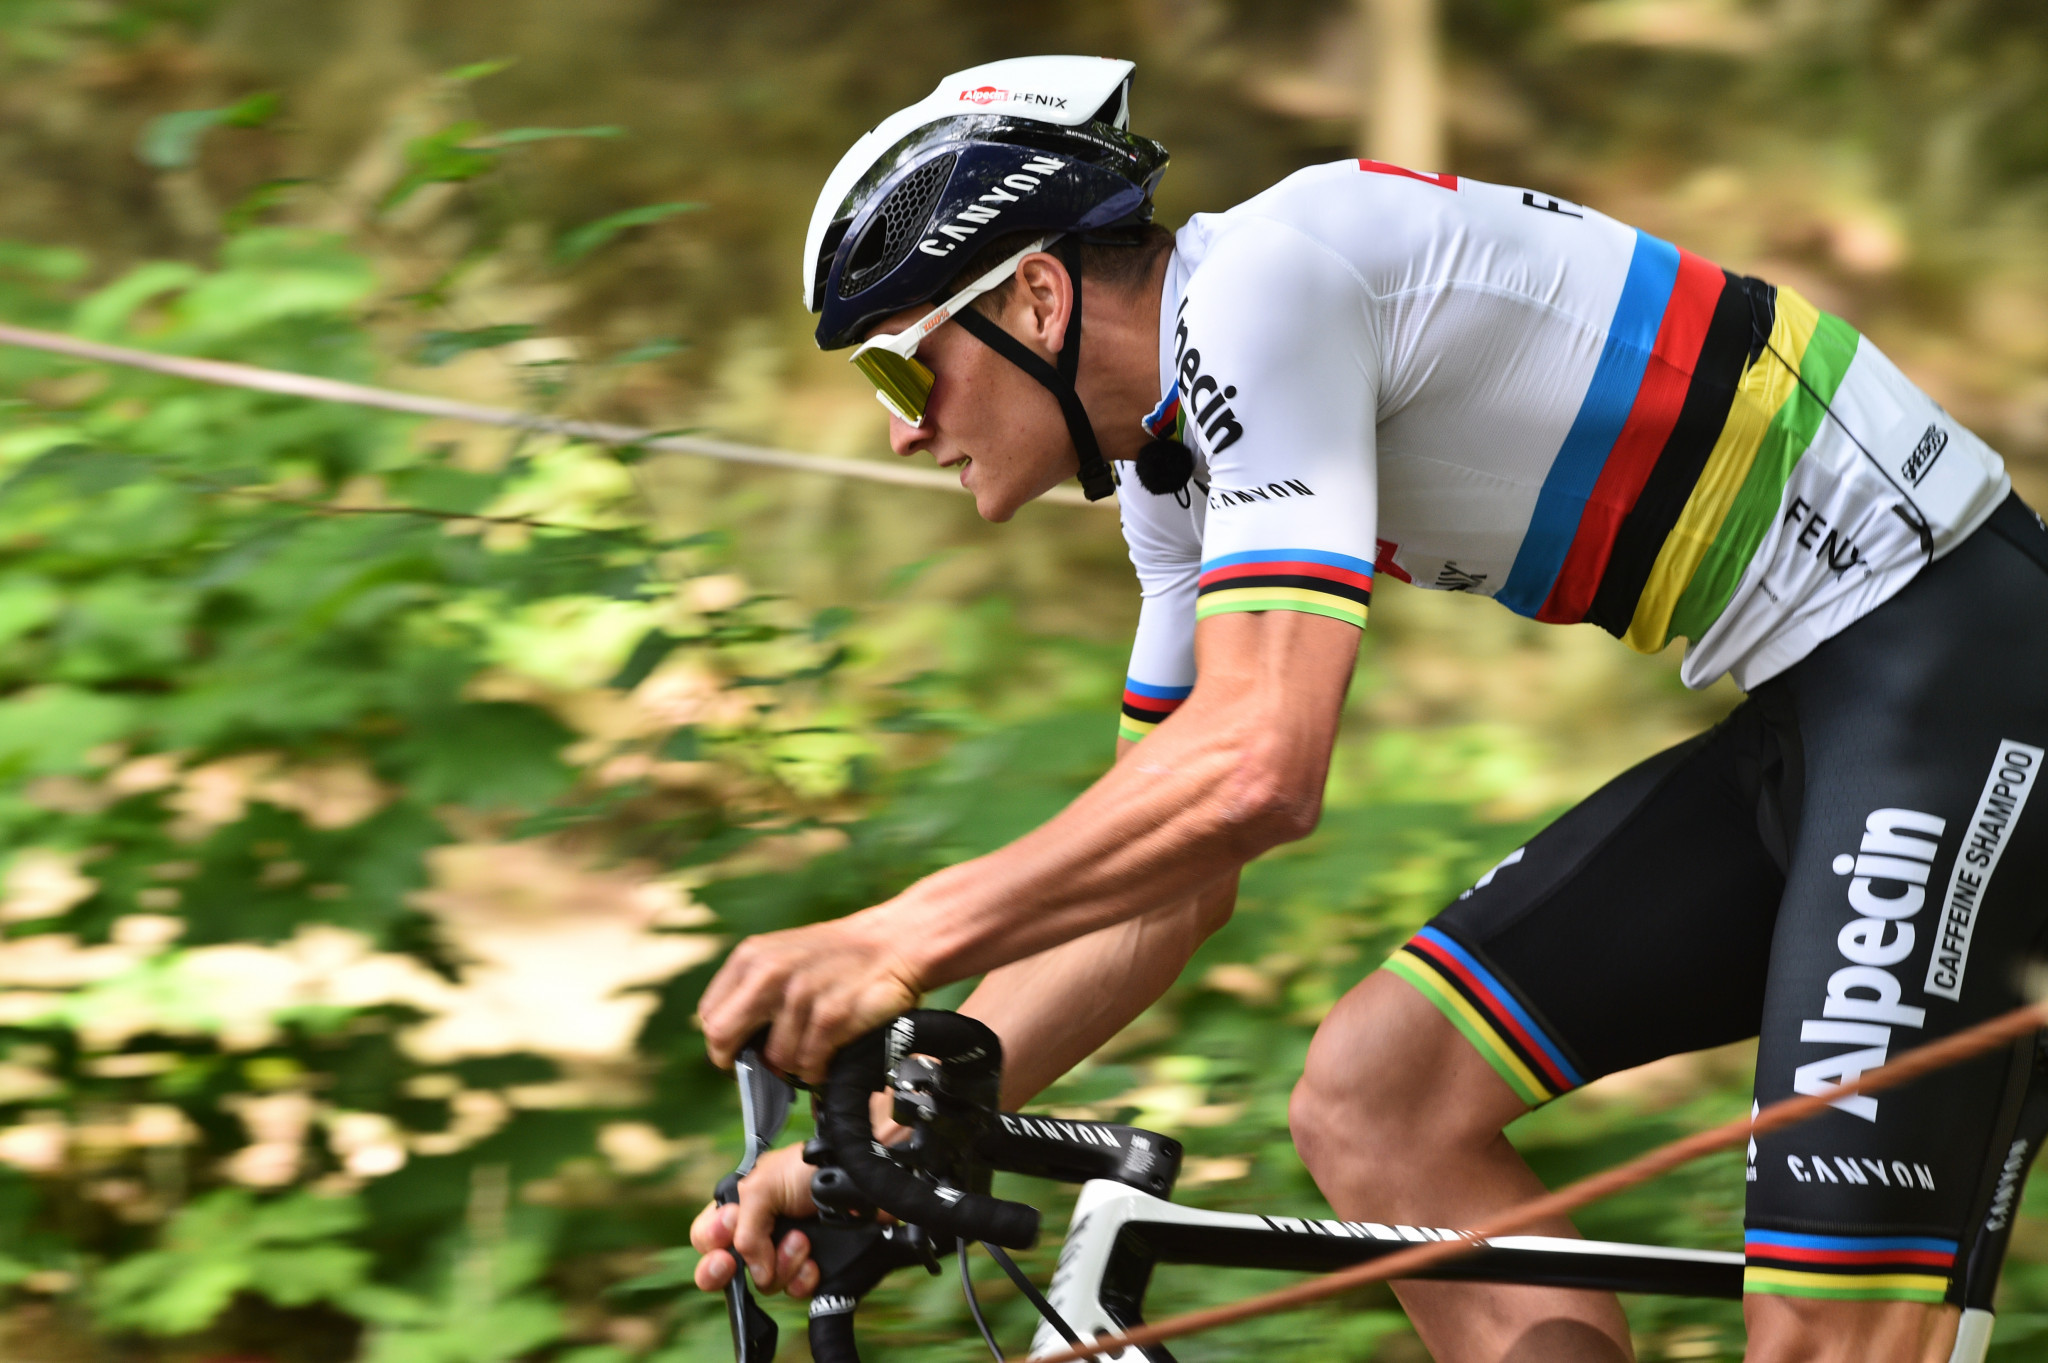 Van der Poel snatches victory at stage seven of Tirreno-Adriatico